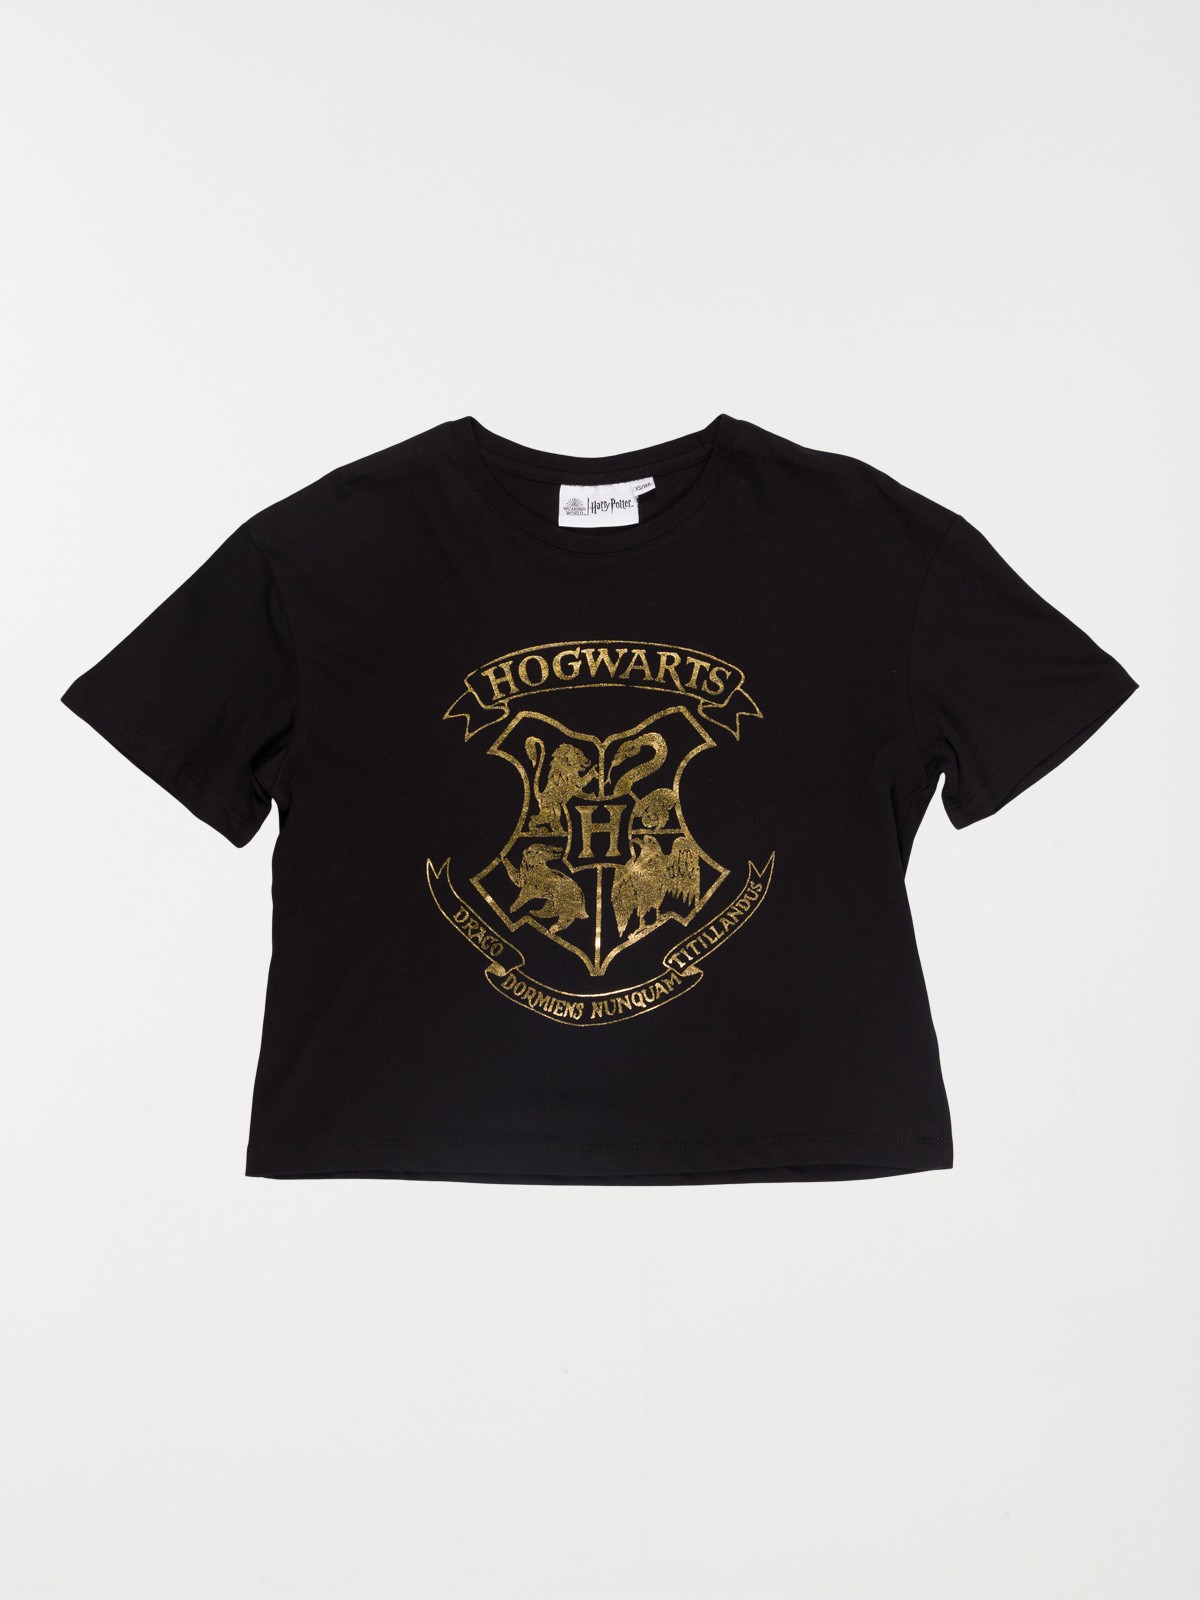 Harry Potter - T-shirt - Fille 